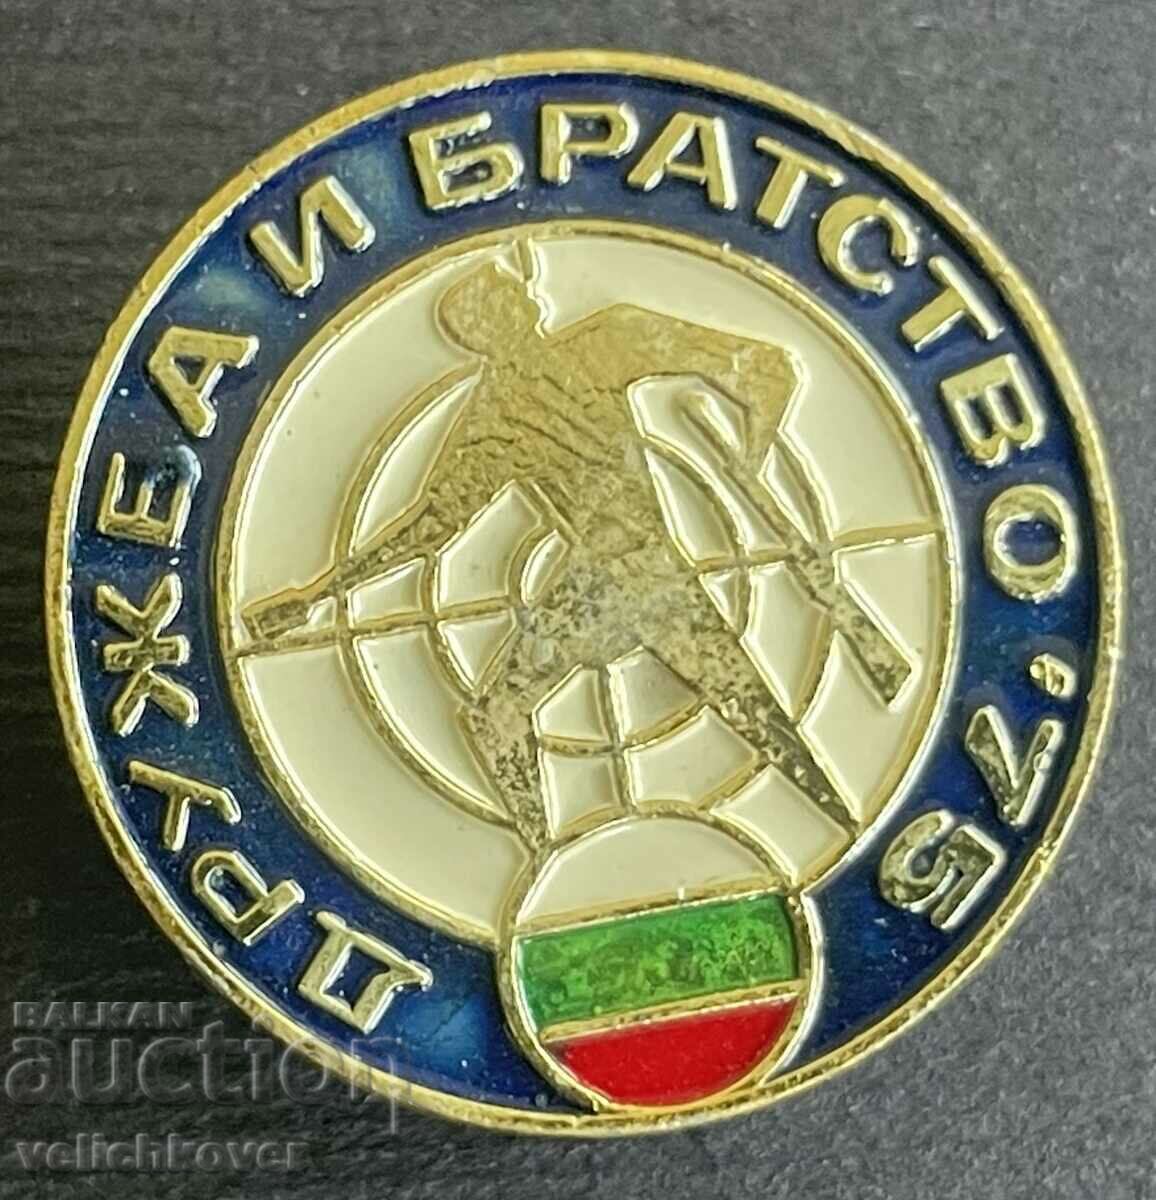 35844 Bulgaria concursuri militare tir Prietenie și fraternitate